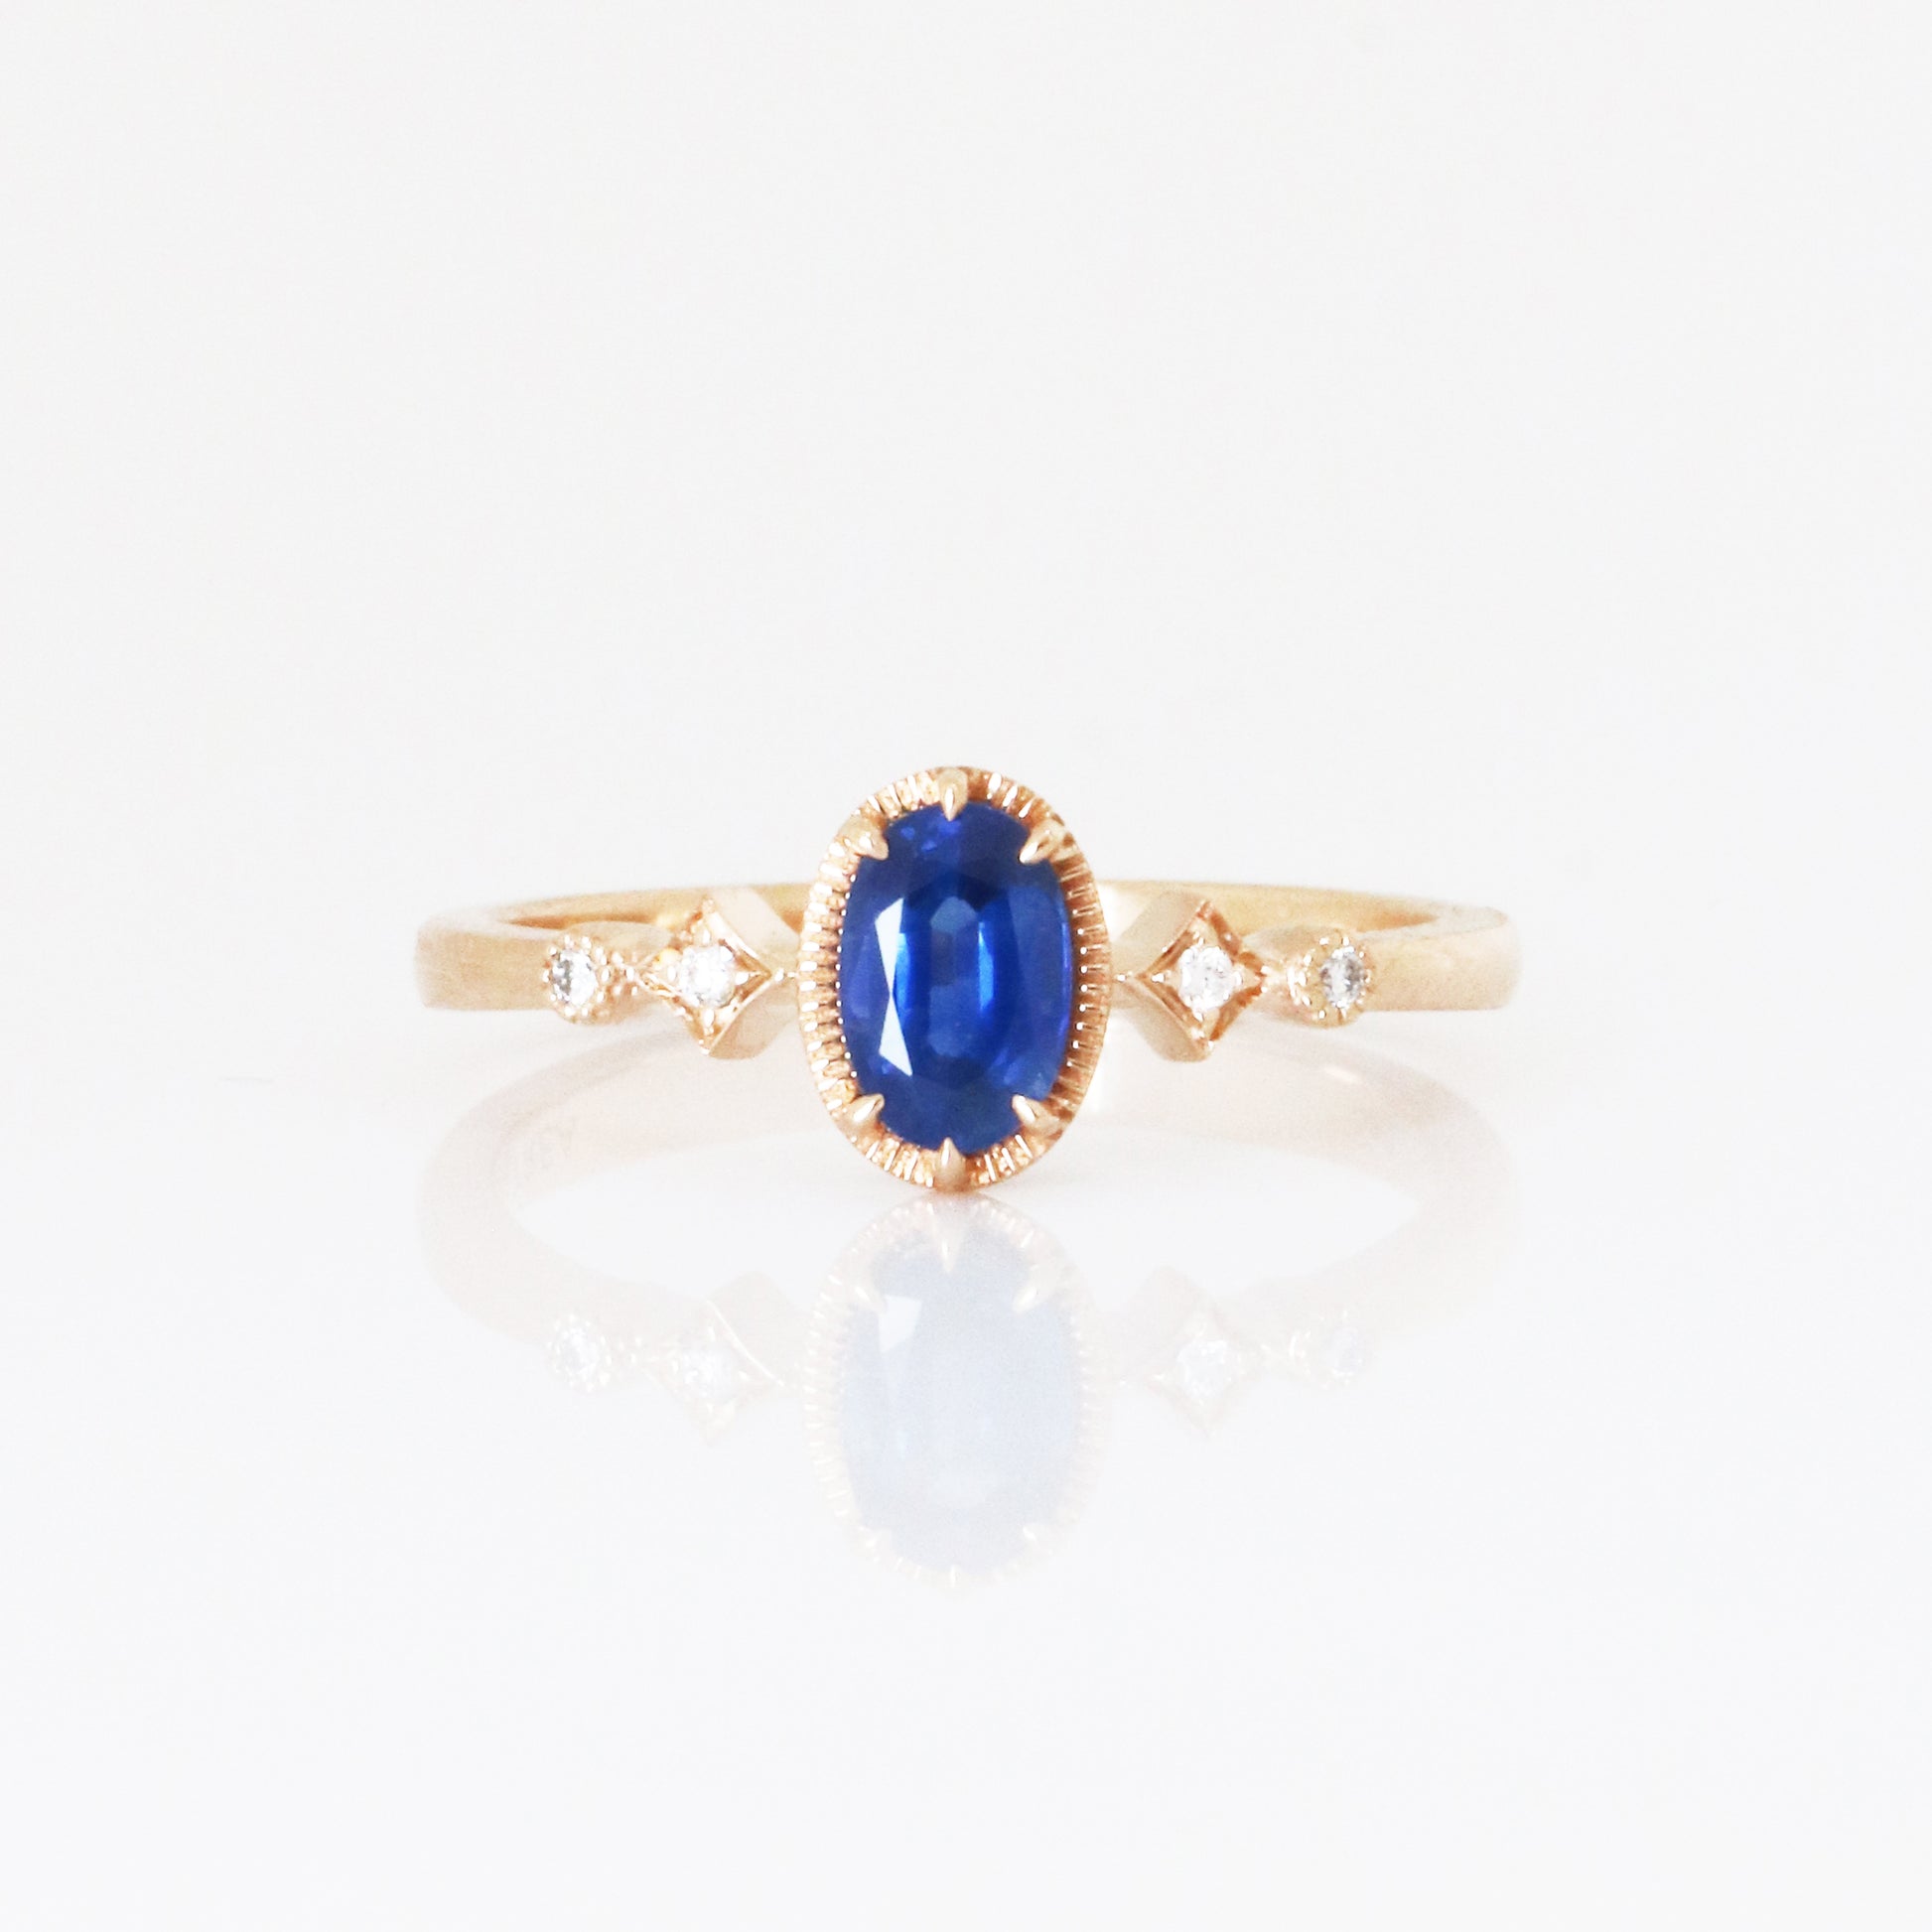 18k玫瑰金復古藍寶石鑽石戒指 18k Rose Gold Vintage Sapphire Diamond Ring